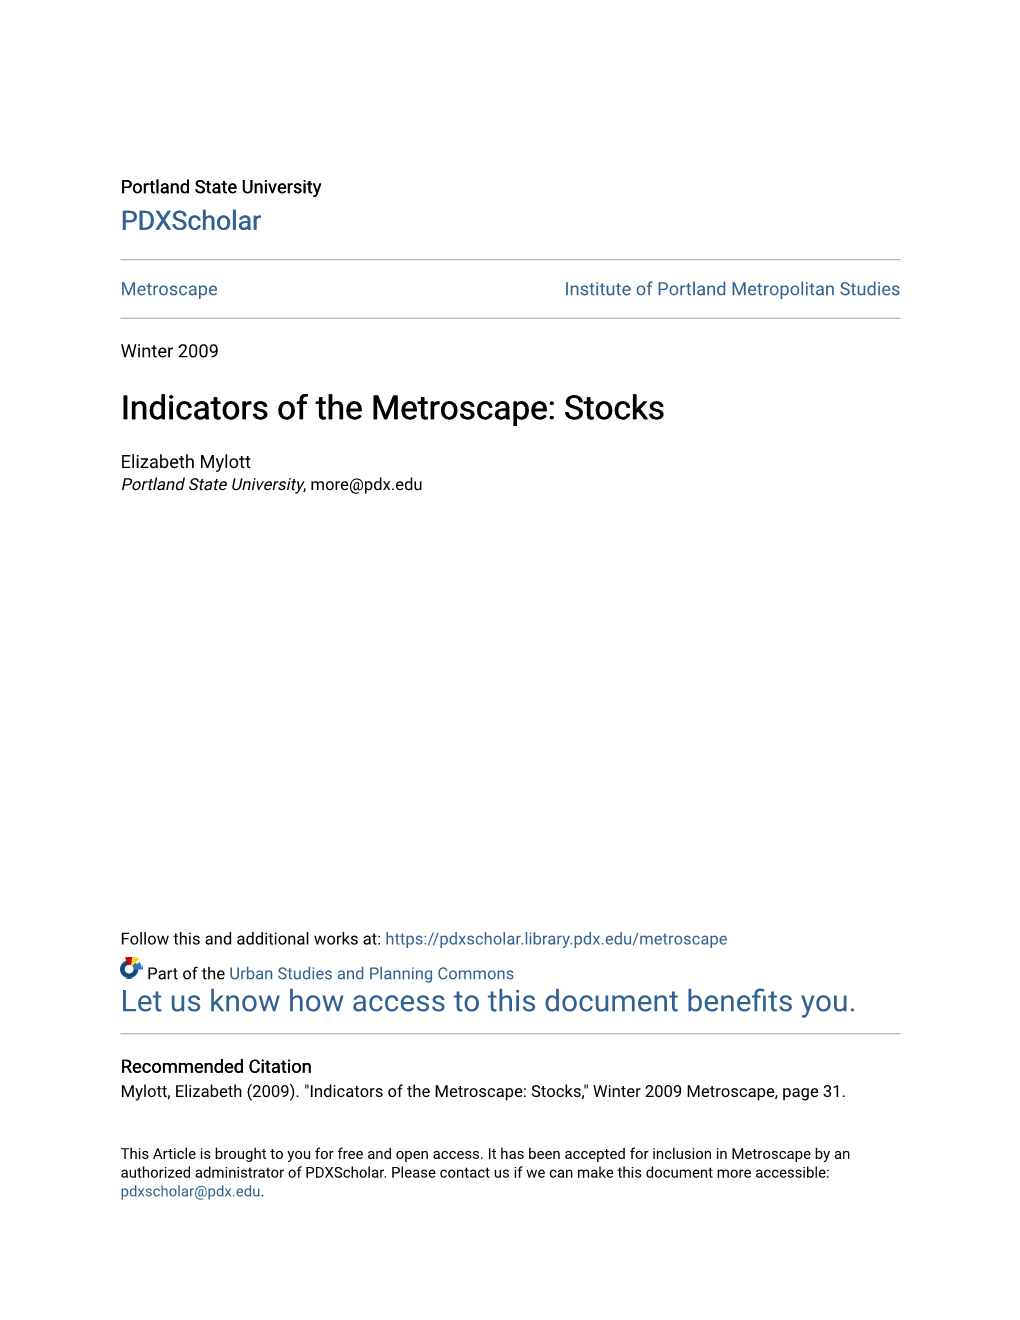 Indicators of the Metroscape: Stocks